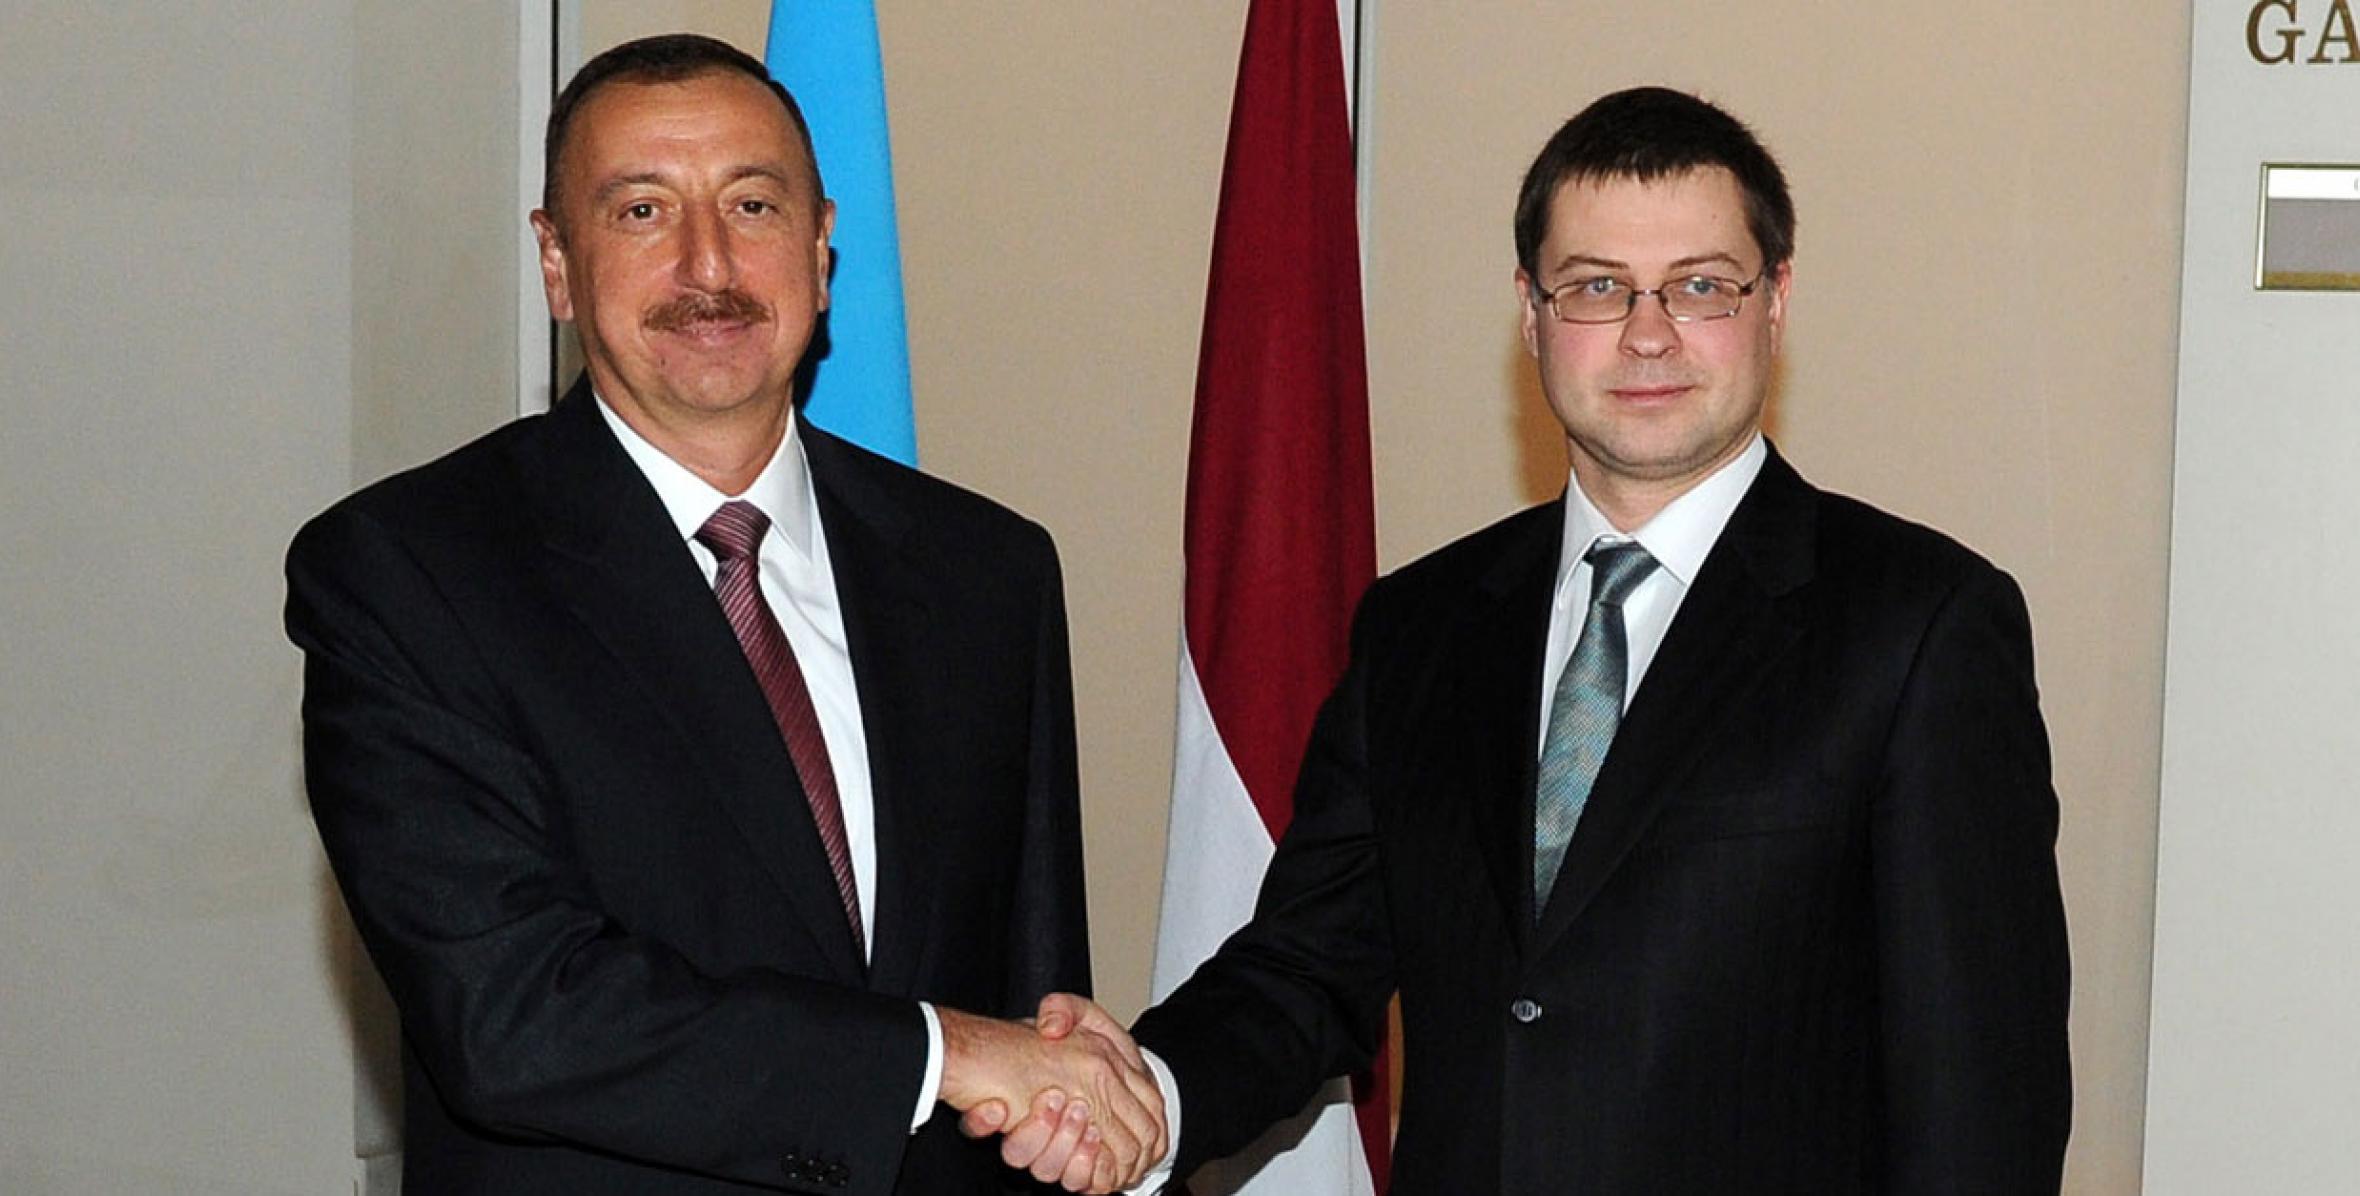 Ilham Aliyev met with Prime Minister of Latvia Valdis Dombrovskis